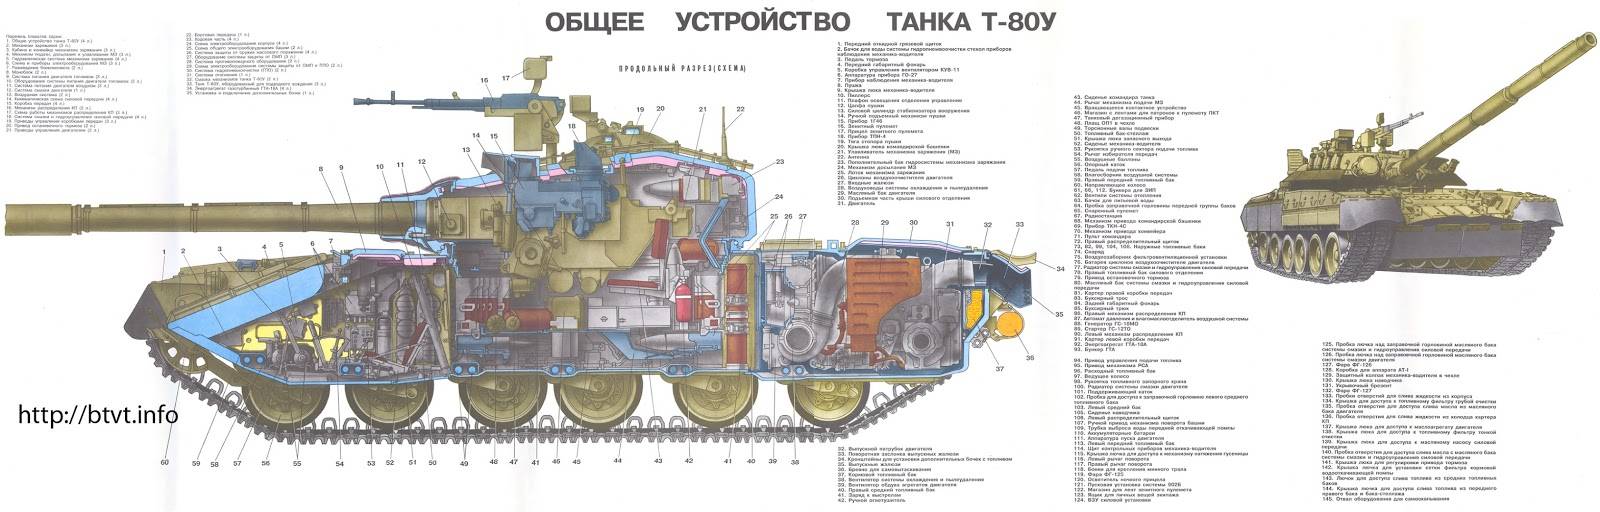 Легкий плавающий танк пт-76б